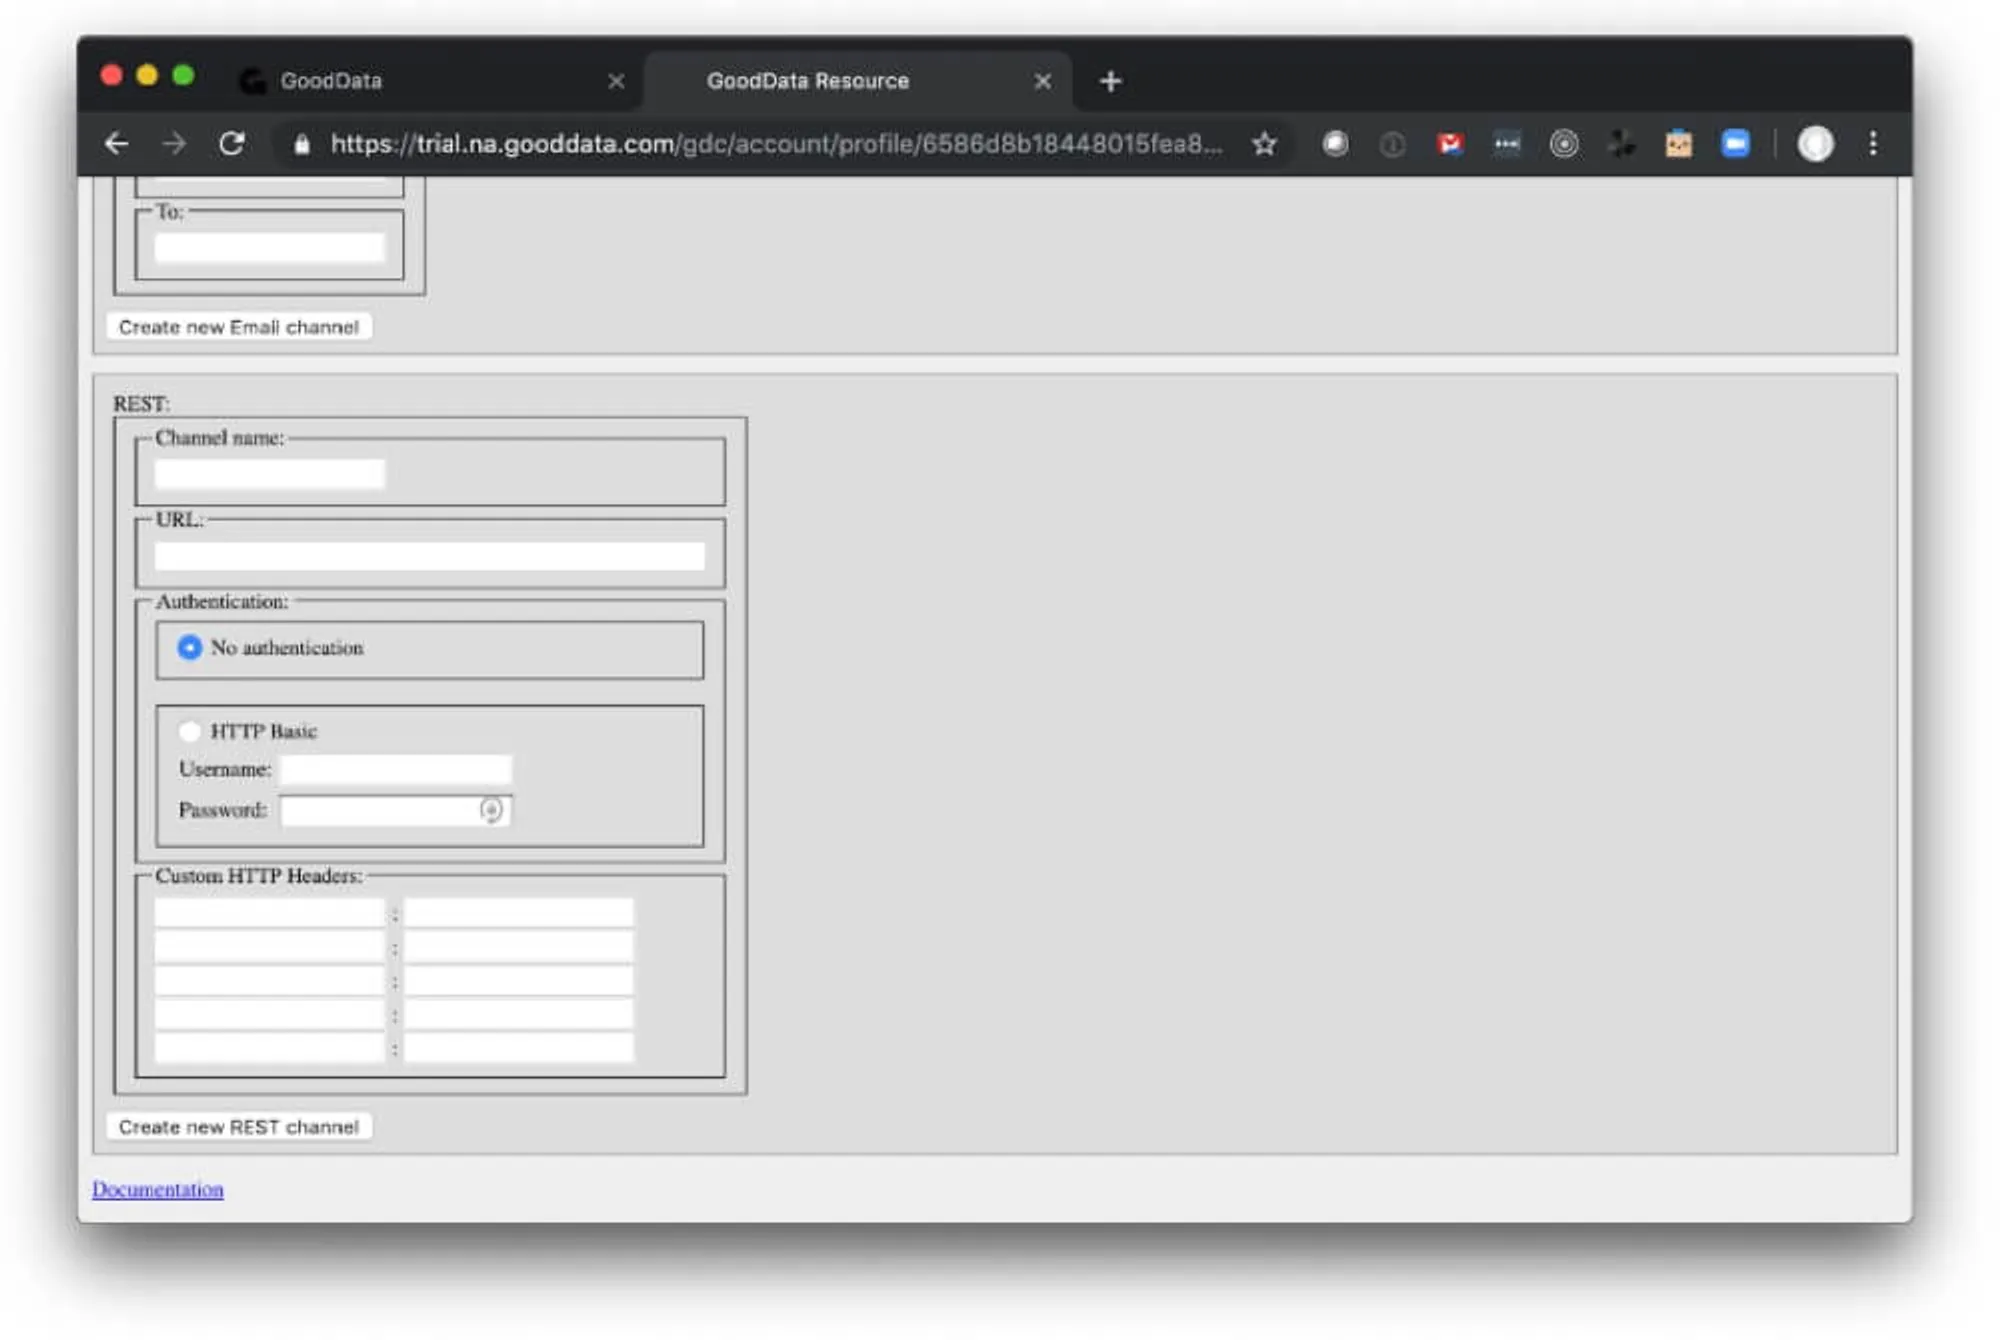 Slack integration tutorial image